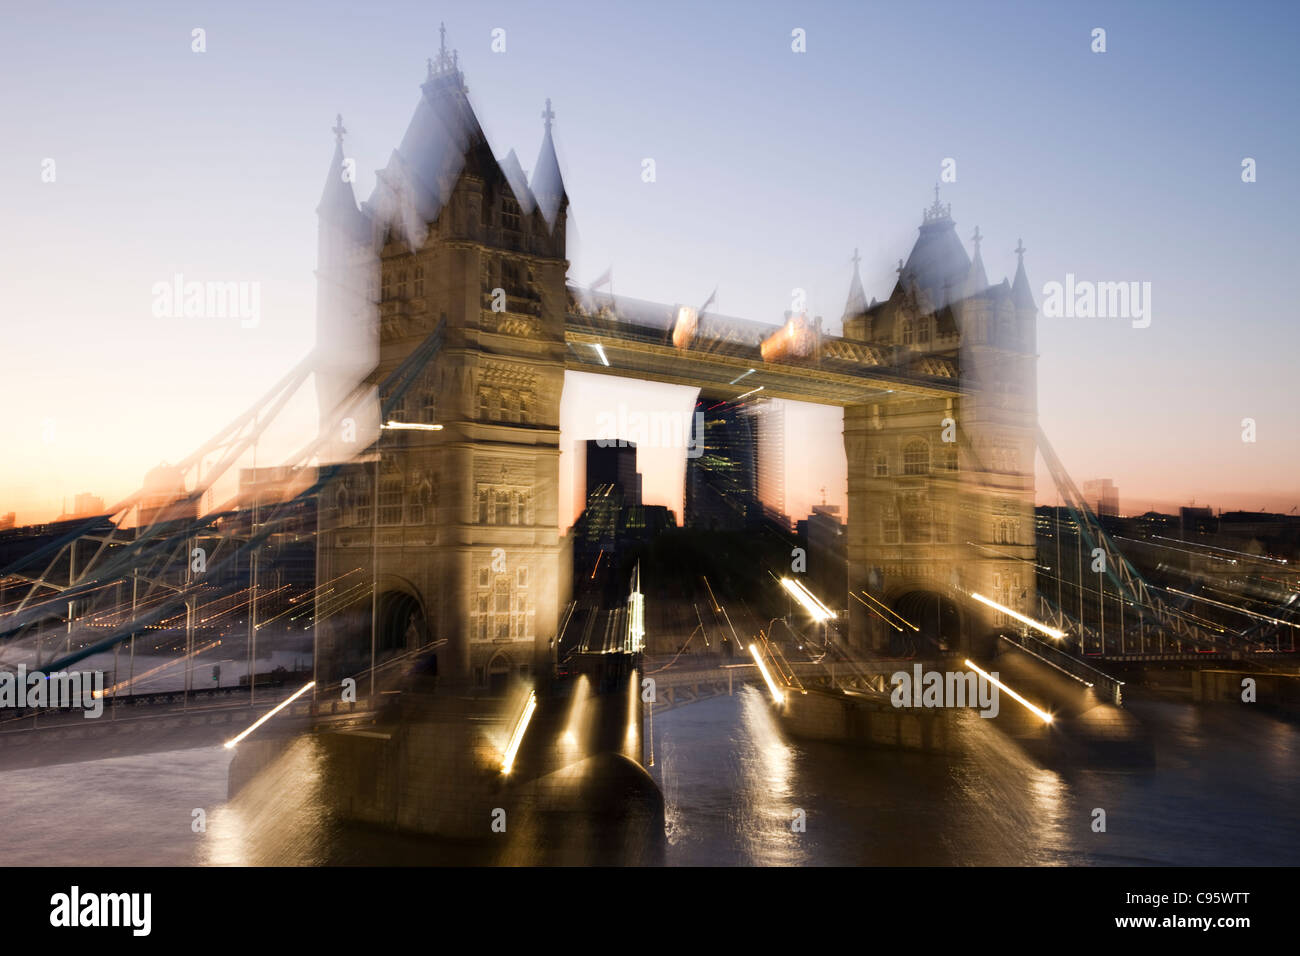 England, London, Tower Bridge and River Thames at night Stock Photo